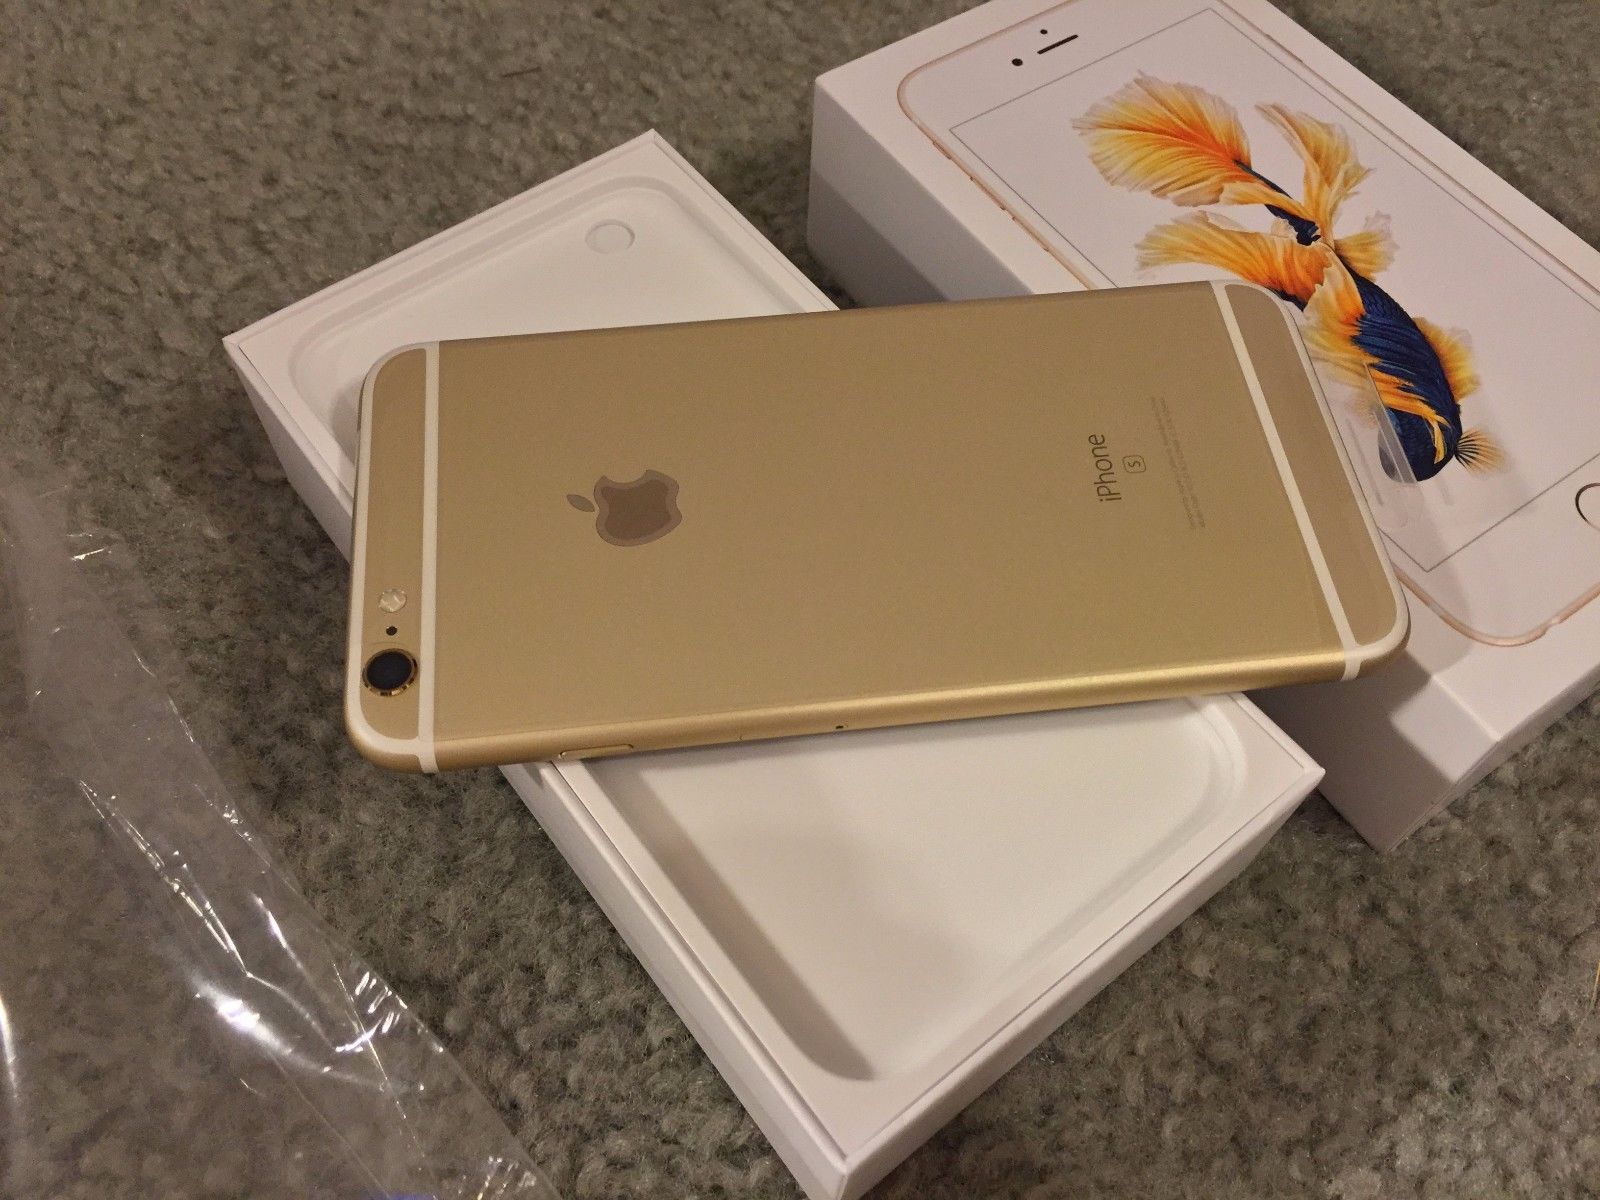 Buy 2 Get 1 Free - iPhone 6S Plus Rose Gold - $400